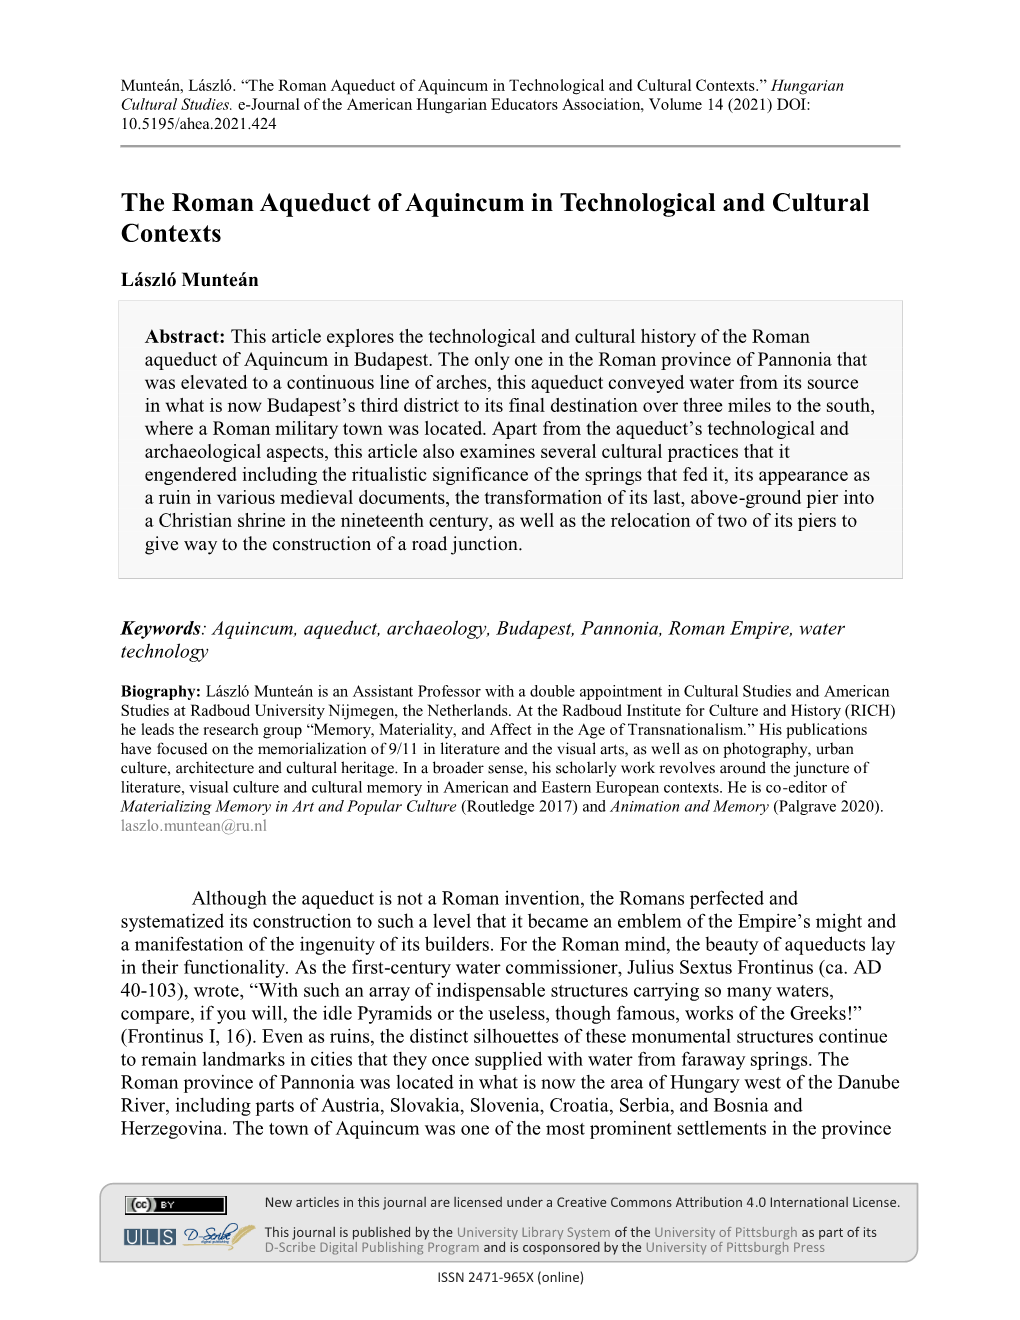 The Roman Aqueduct of Aquincum in Technological and Cultural Contexts.” Hungarian Cultural Studies